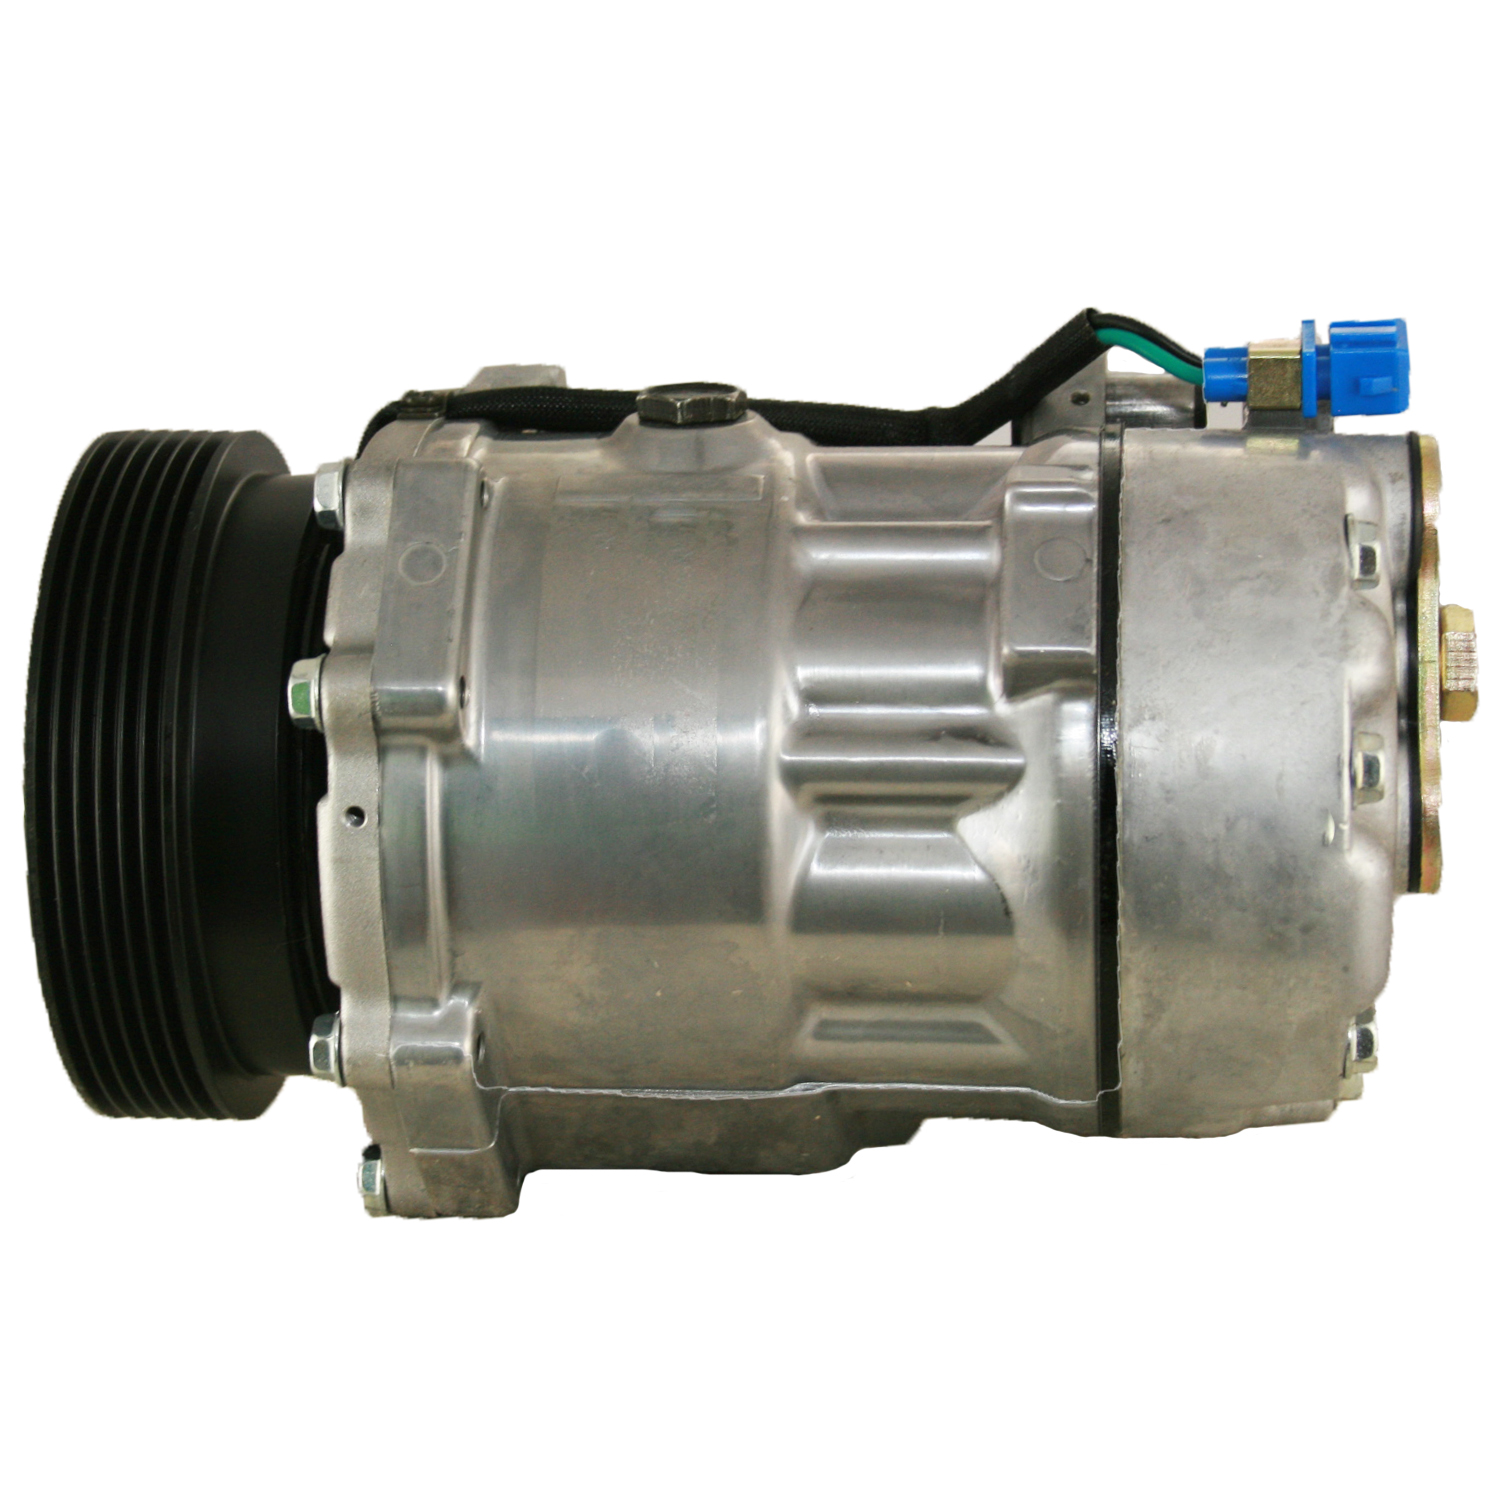 TCW Compressor 40750.601NEW New Product Image field_60b6a13a6e67c